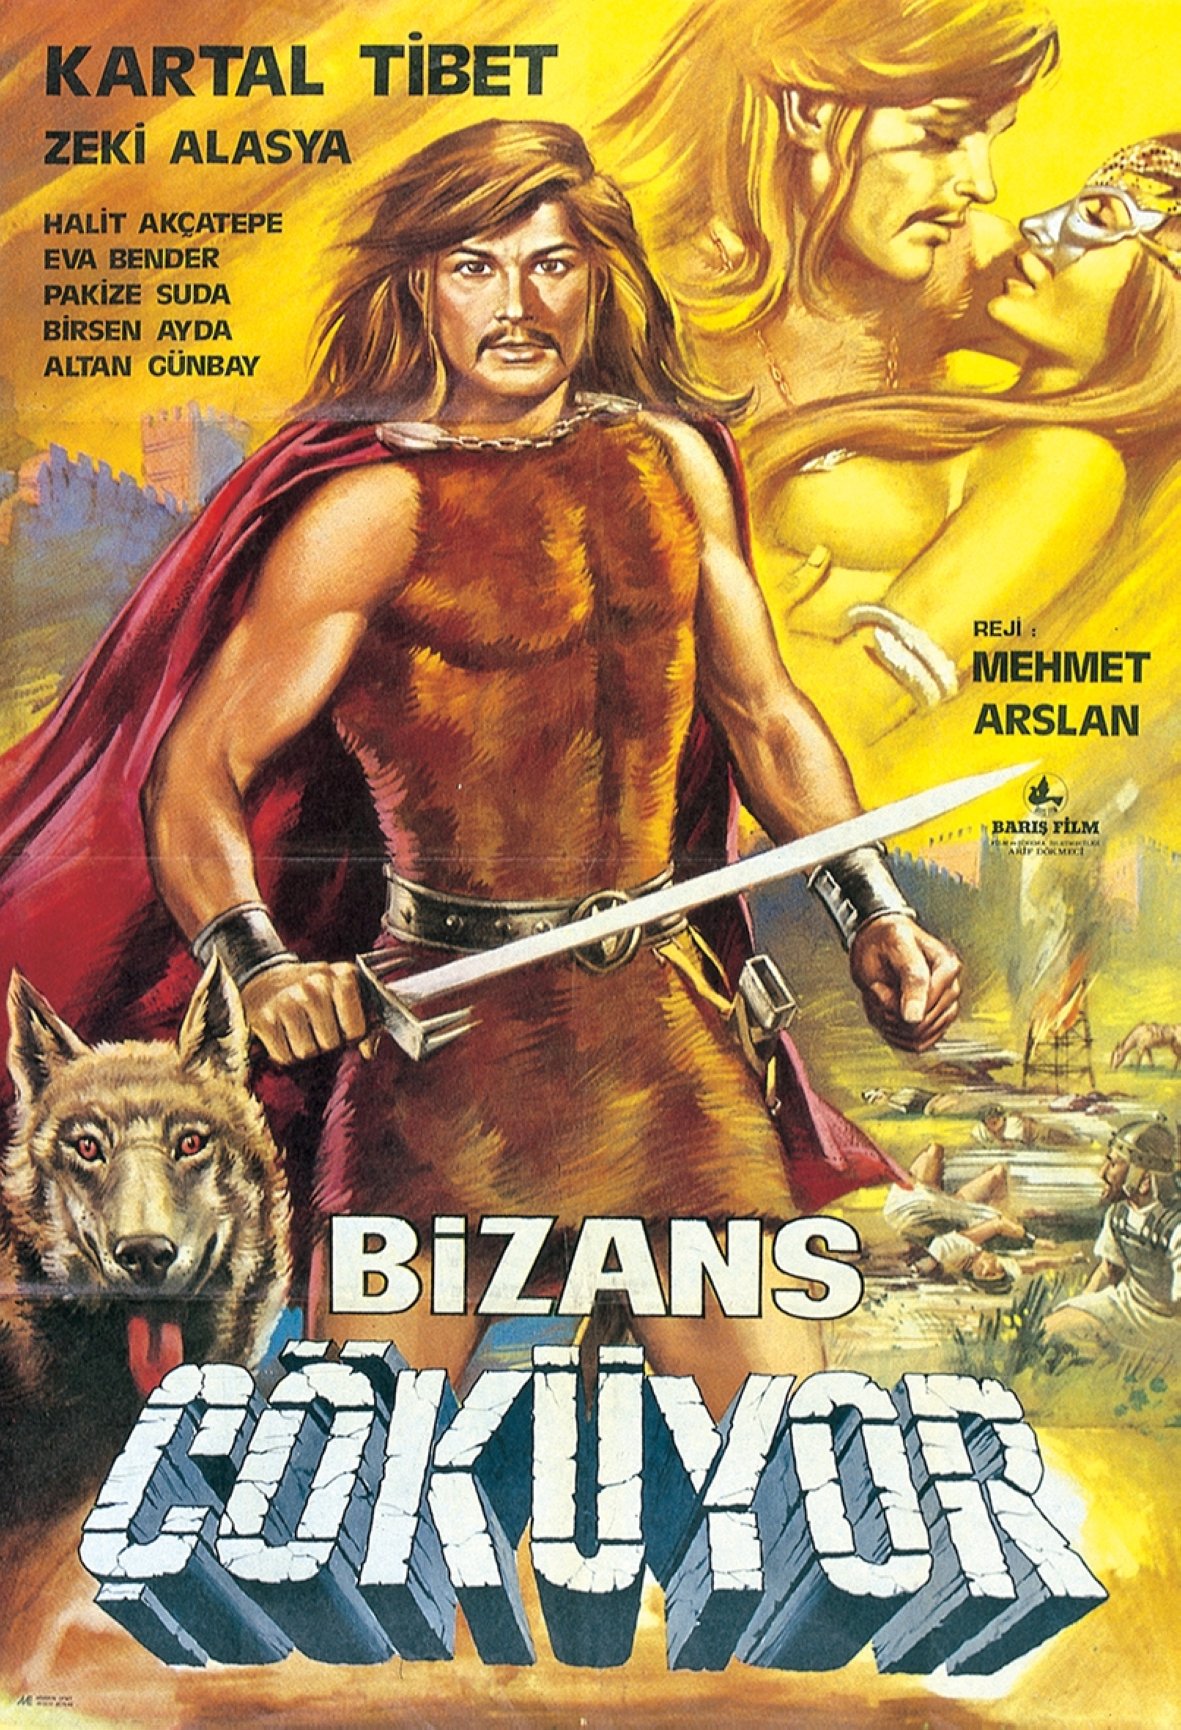 Movie poster 'Bizans Ã‡Ã¶kÃ¼yor', Arzu Film, 1973 (<a class=